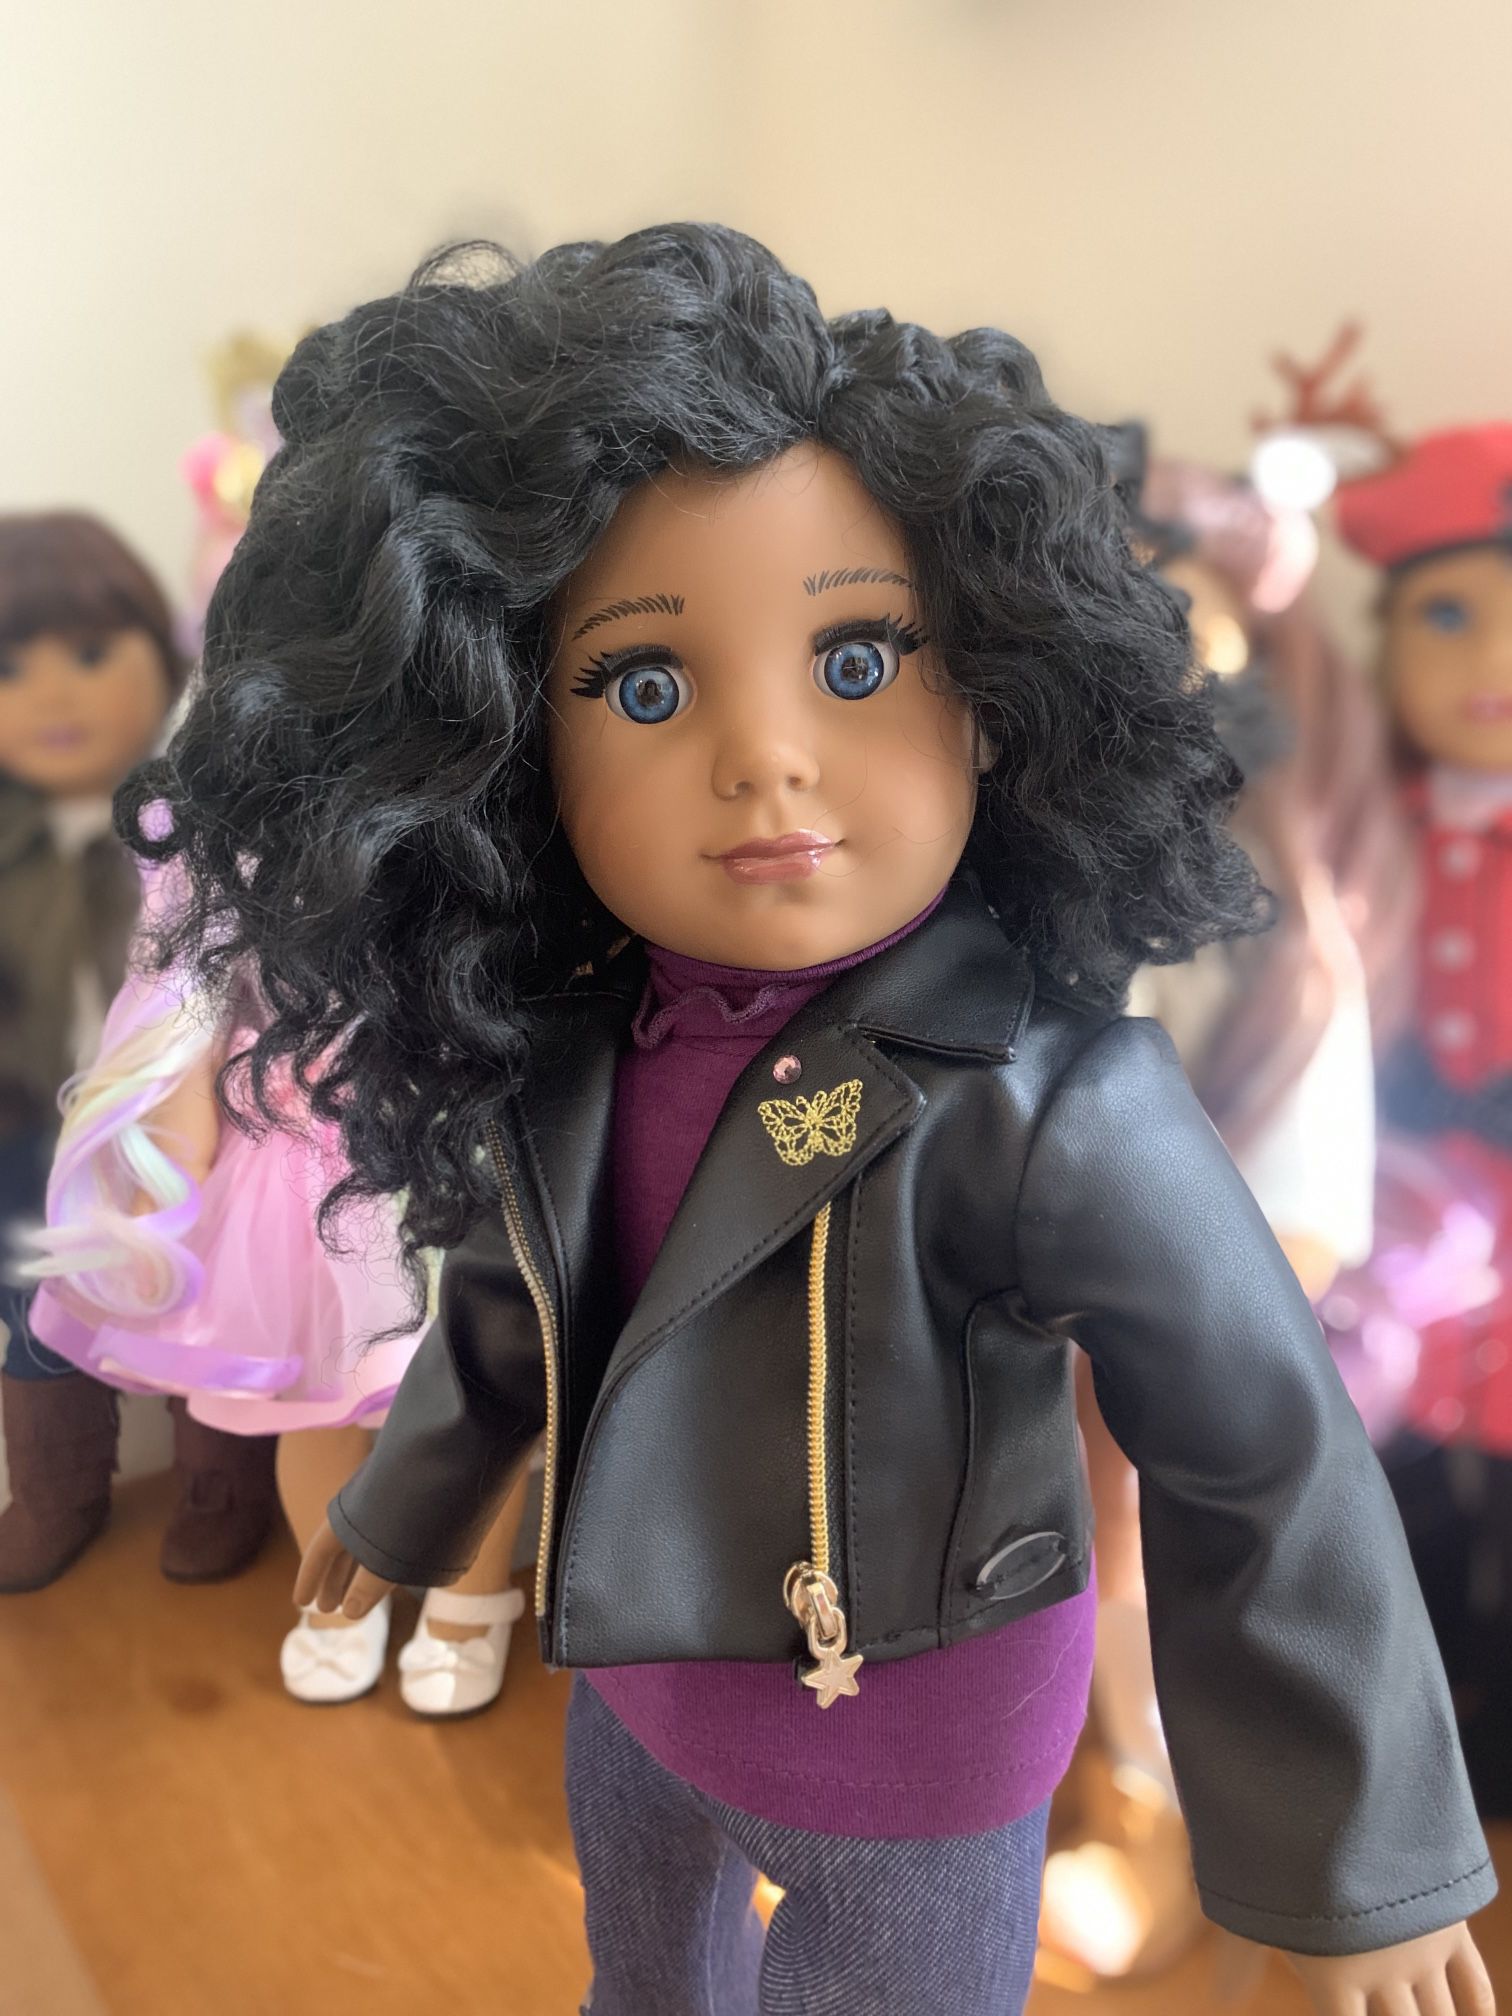 OOAK Custom American Girl Kaya Doll